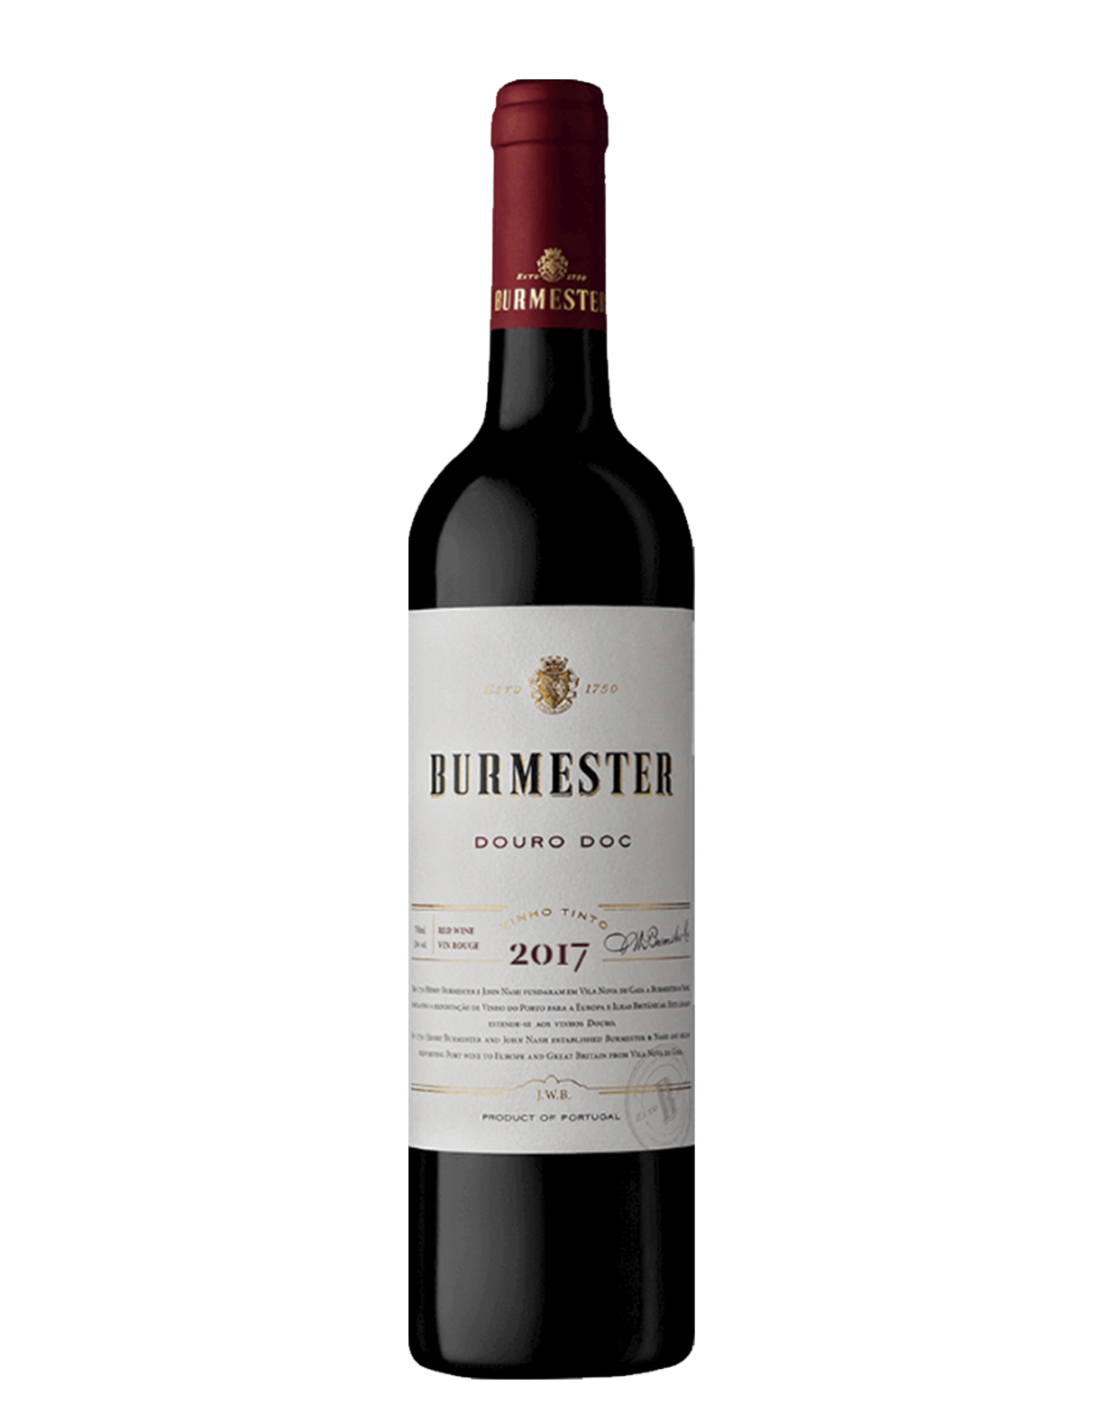 Vin rosu sec, Casa Burmester Douro, 13% alc., 0.75L, Portugalia alcooldiscount.ro